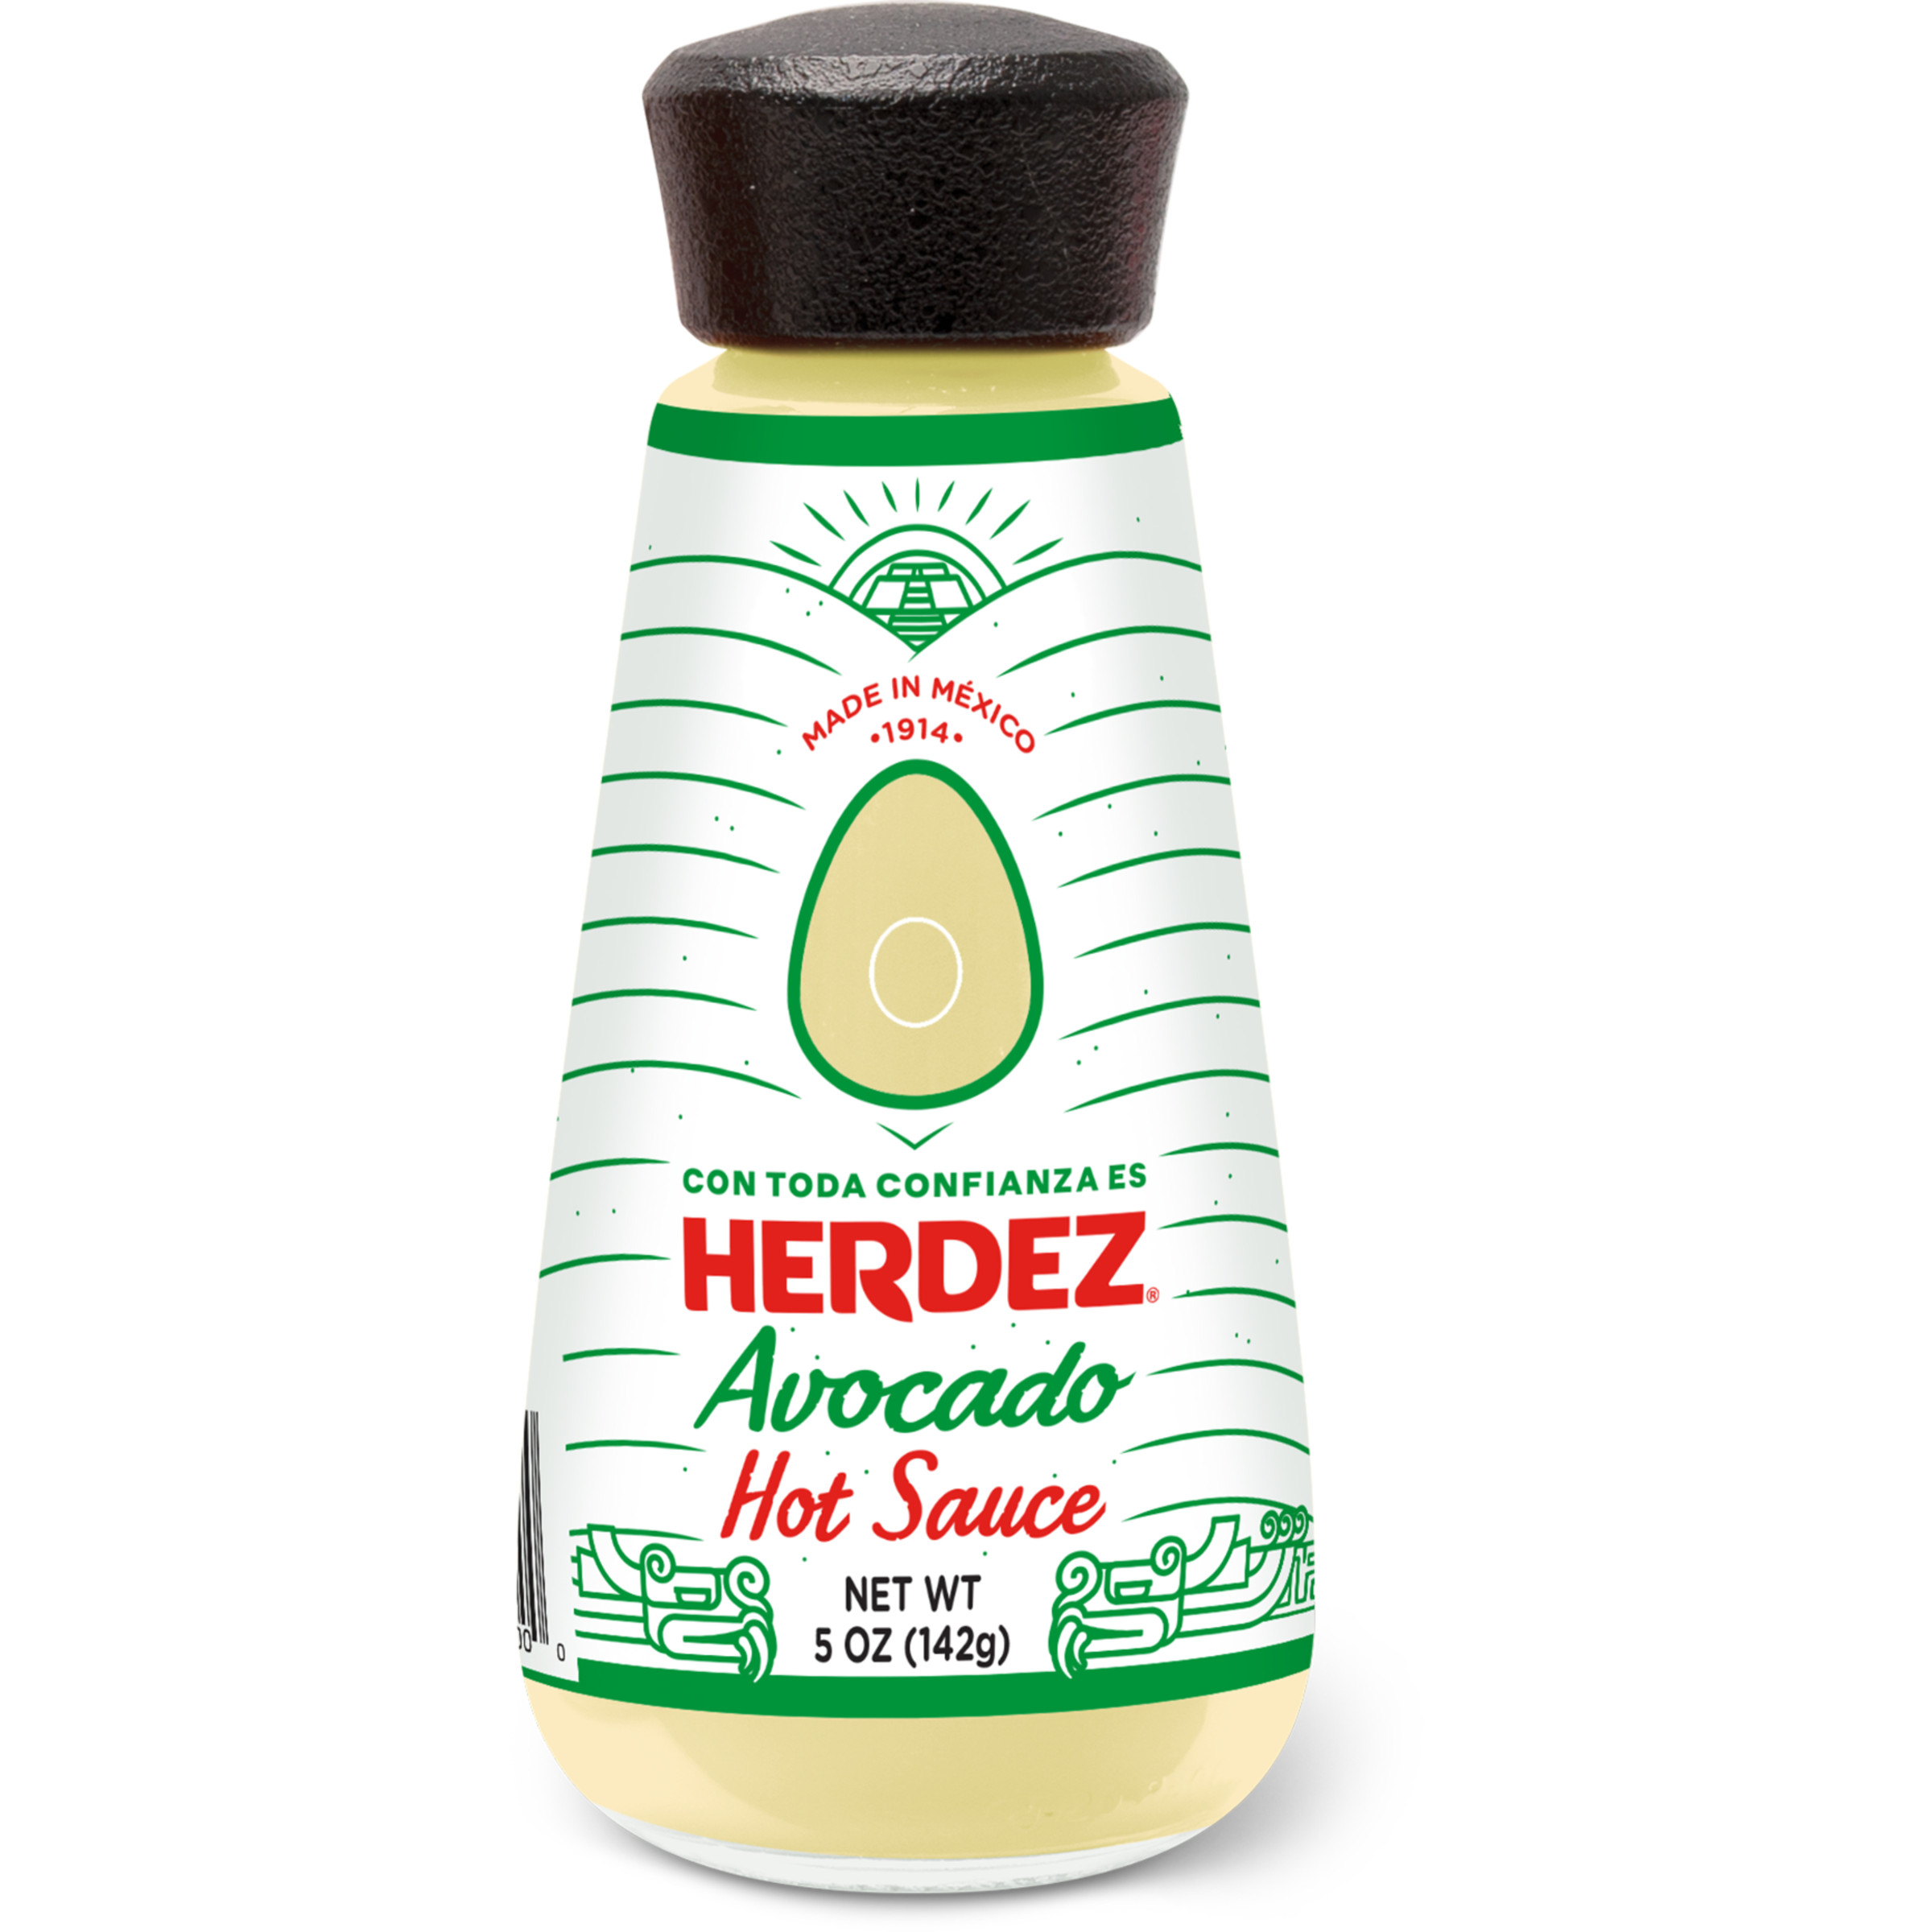 HERDEZ, Avocado Hot Sauce, Taco Topping, Regular, 5 oz Bottle - image 1 of 8